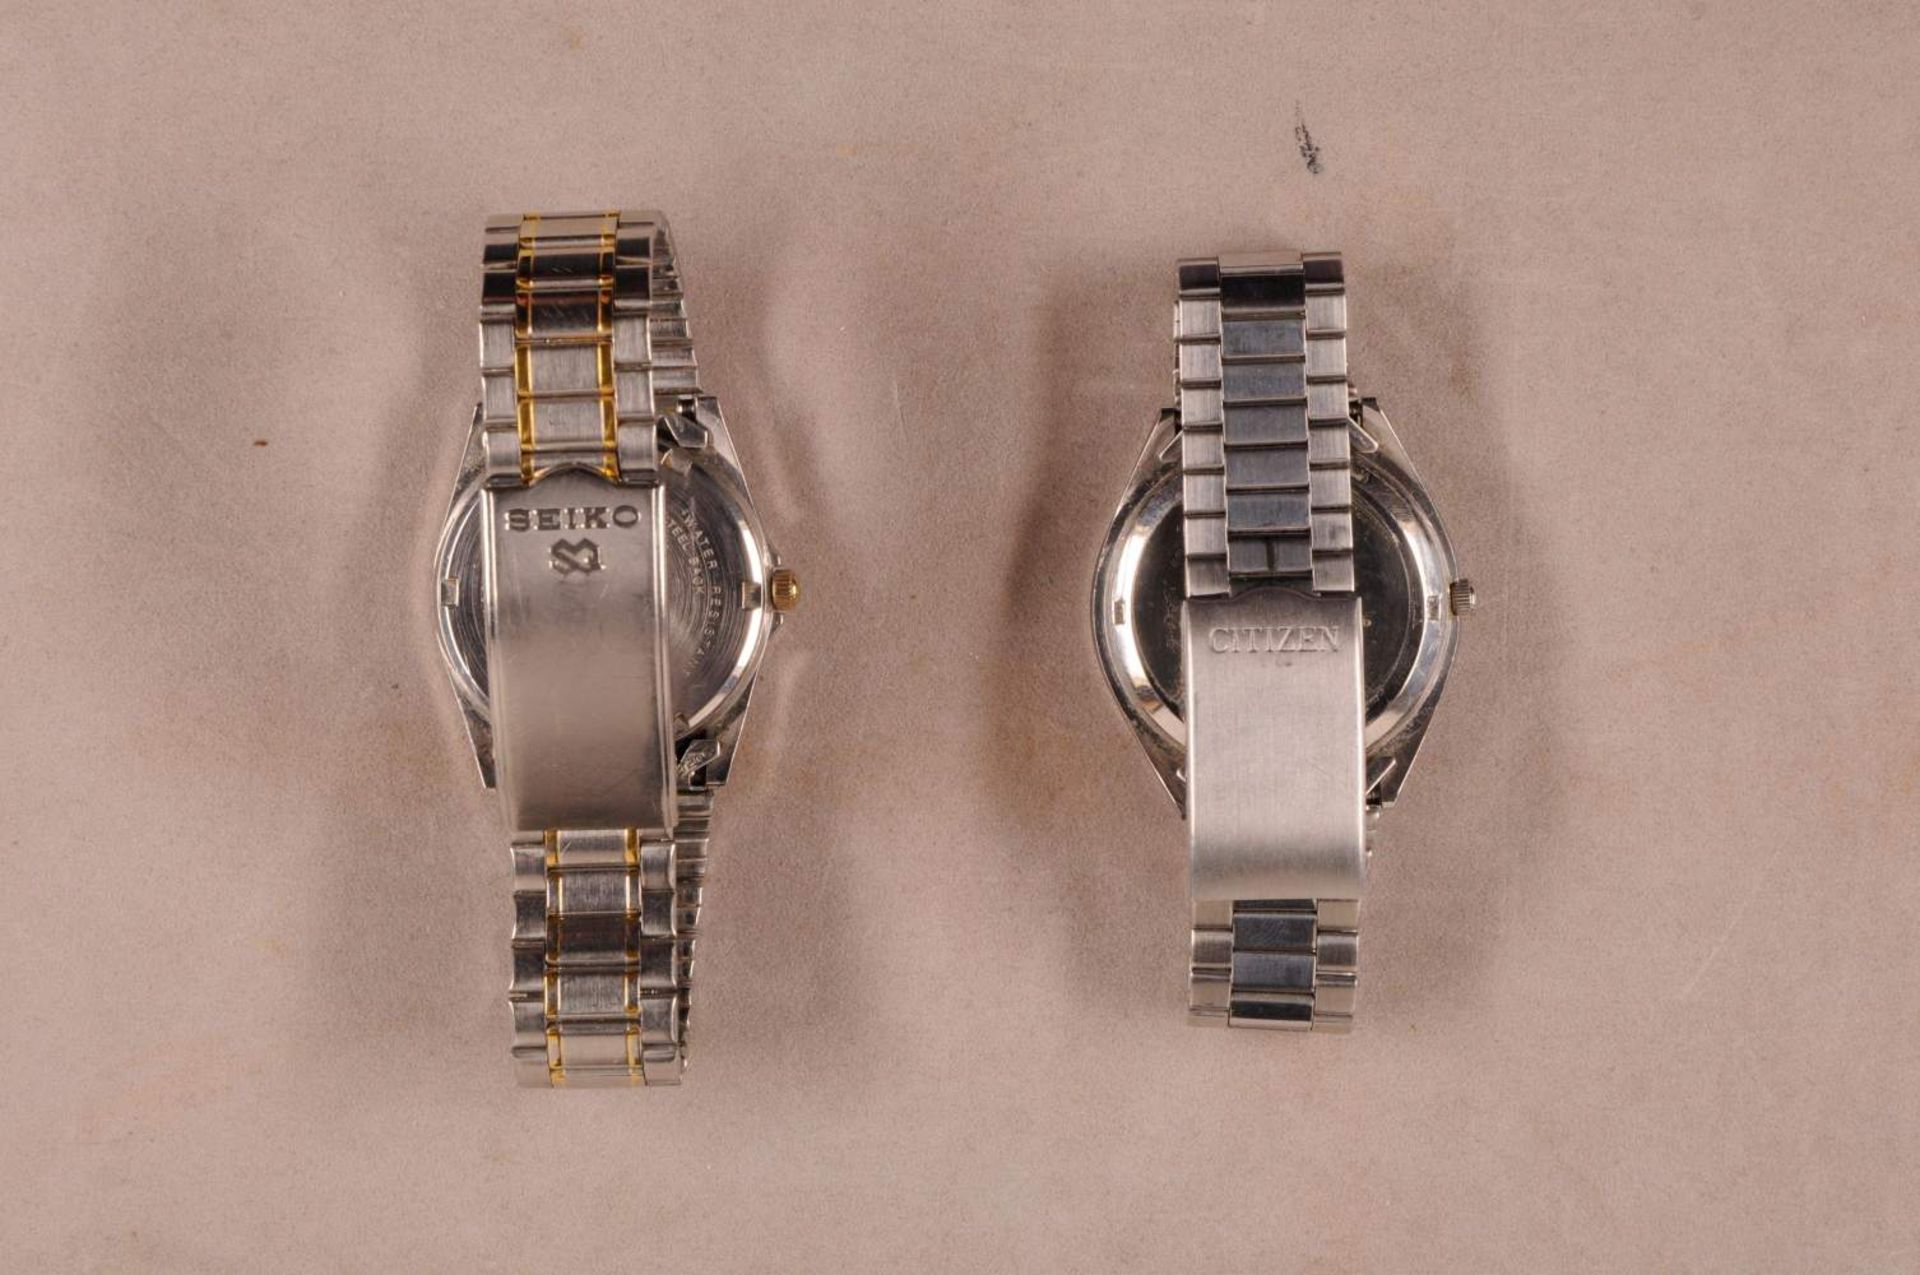 Lot 7 Armbanduhren Edelstahl/Metall/Kunststoff, tlw. vergoldet, bestehend aus: Seiko, Citizen, - Image 10 of 10